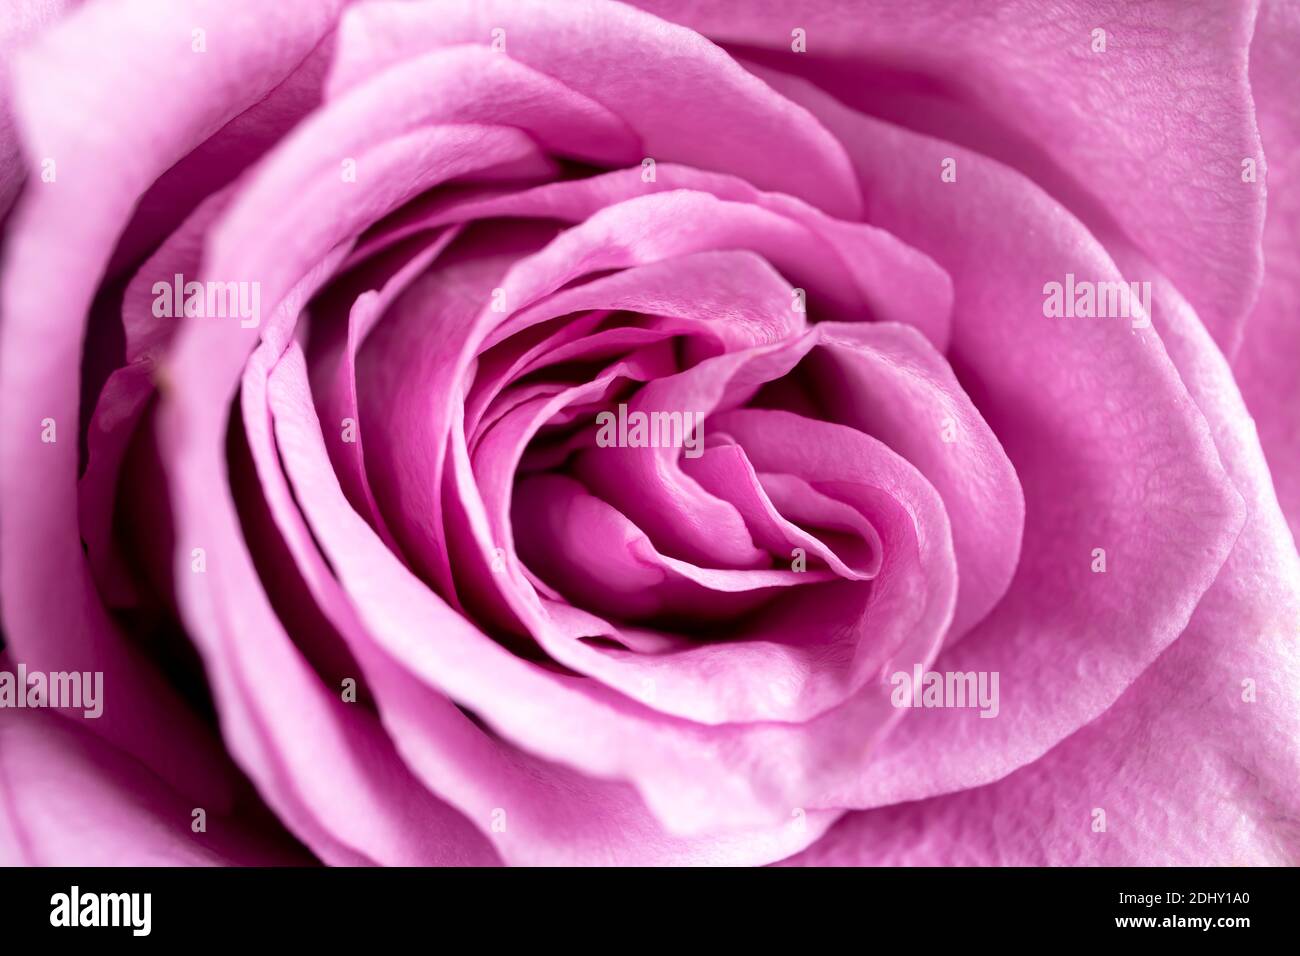 Macro shot of pink rose bud petals as abstract natural background Stock Photo